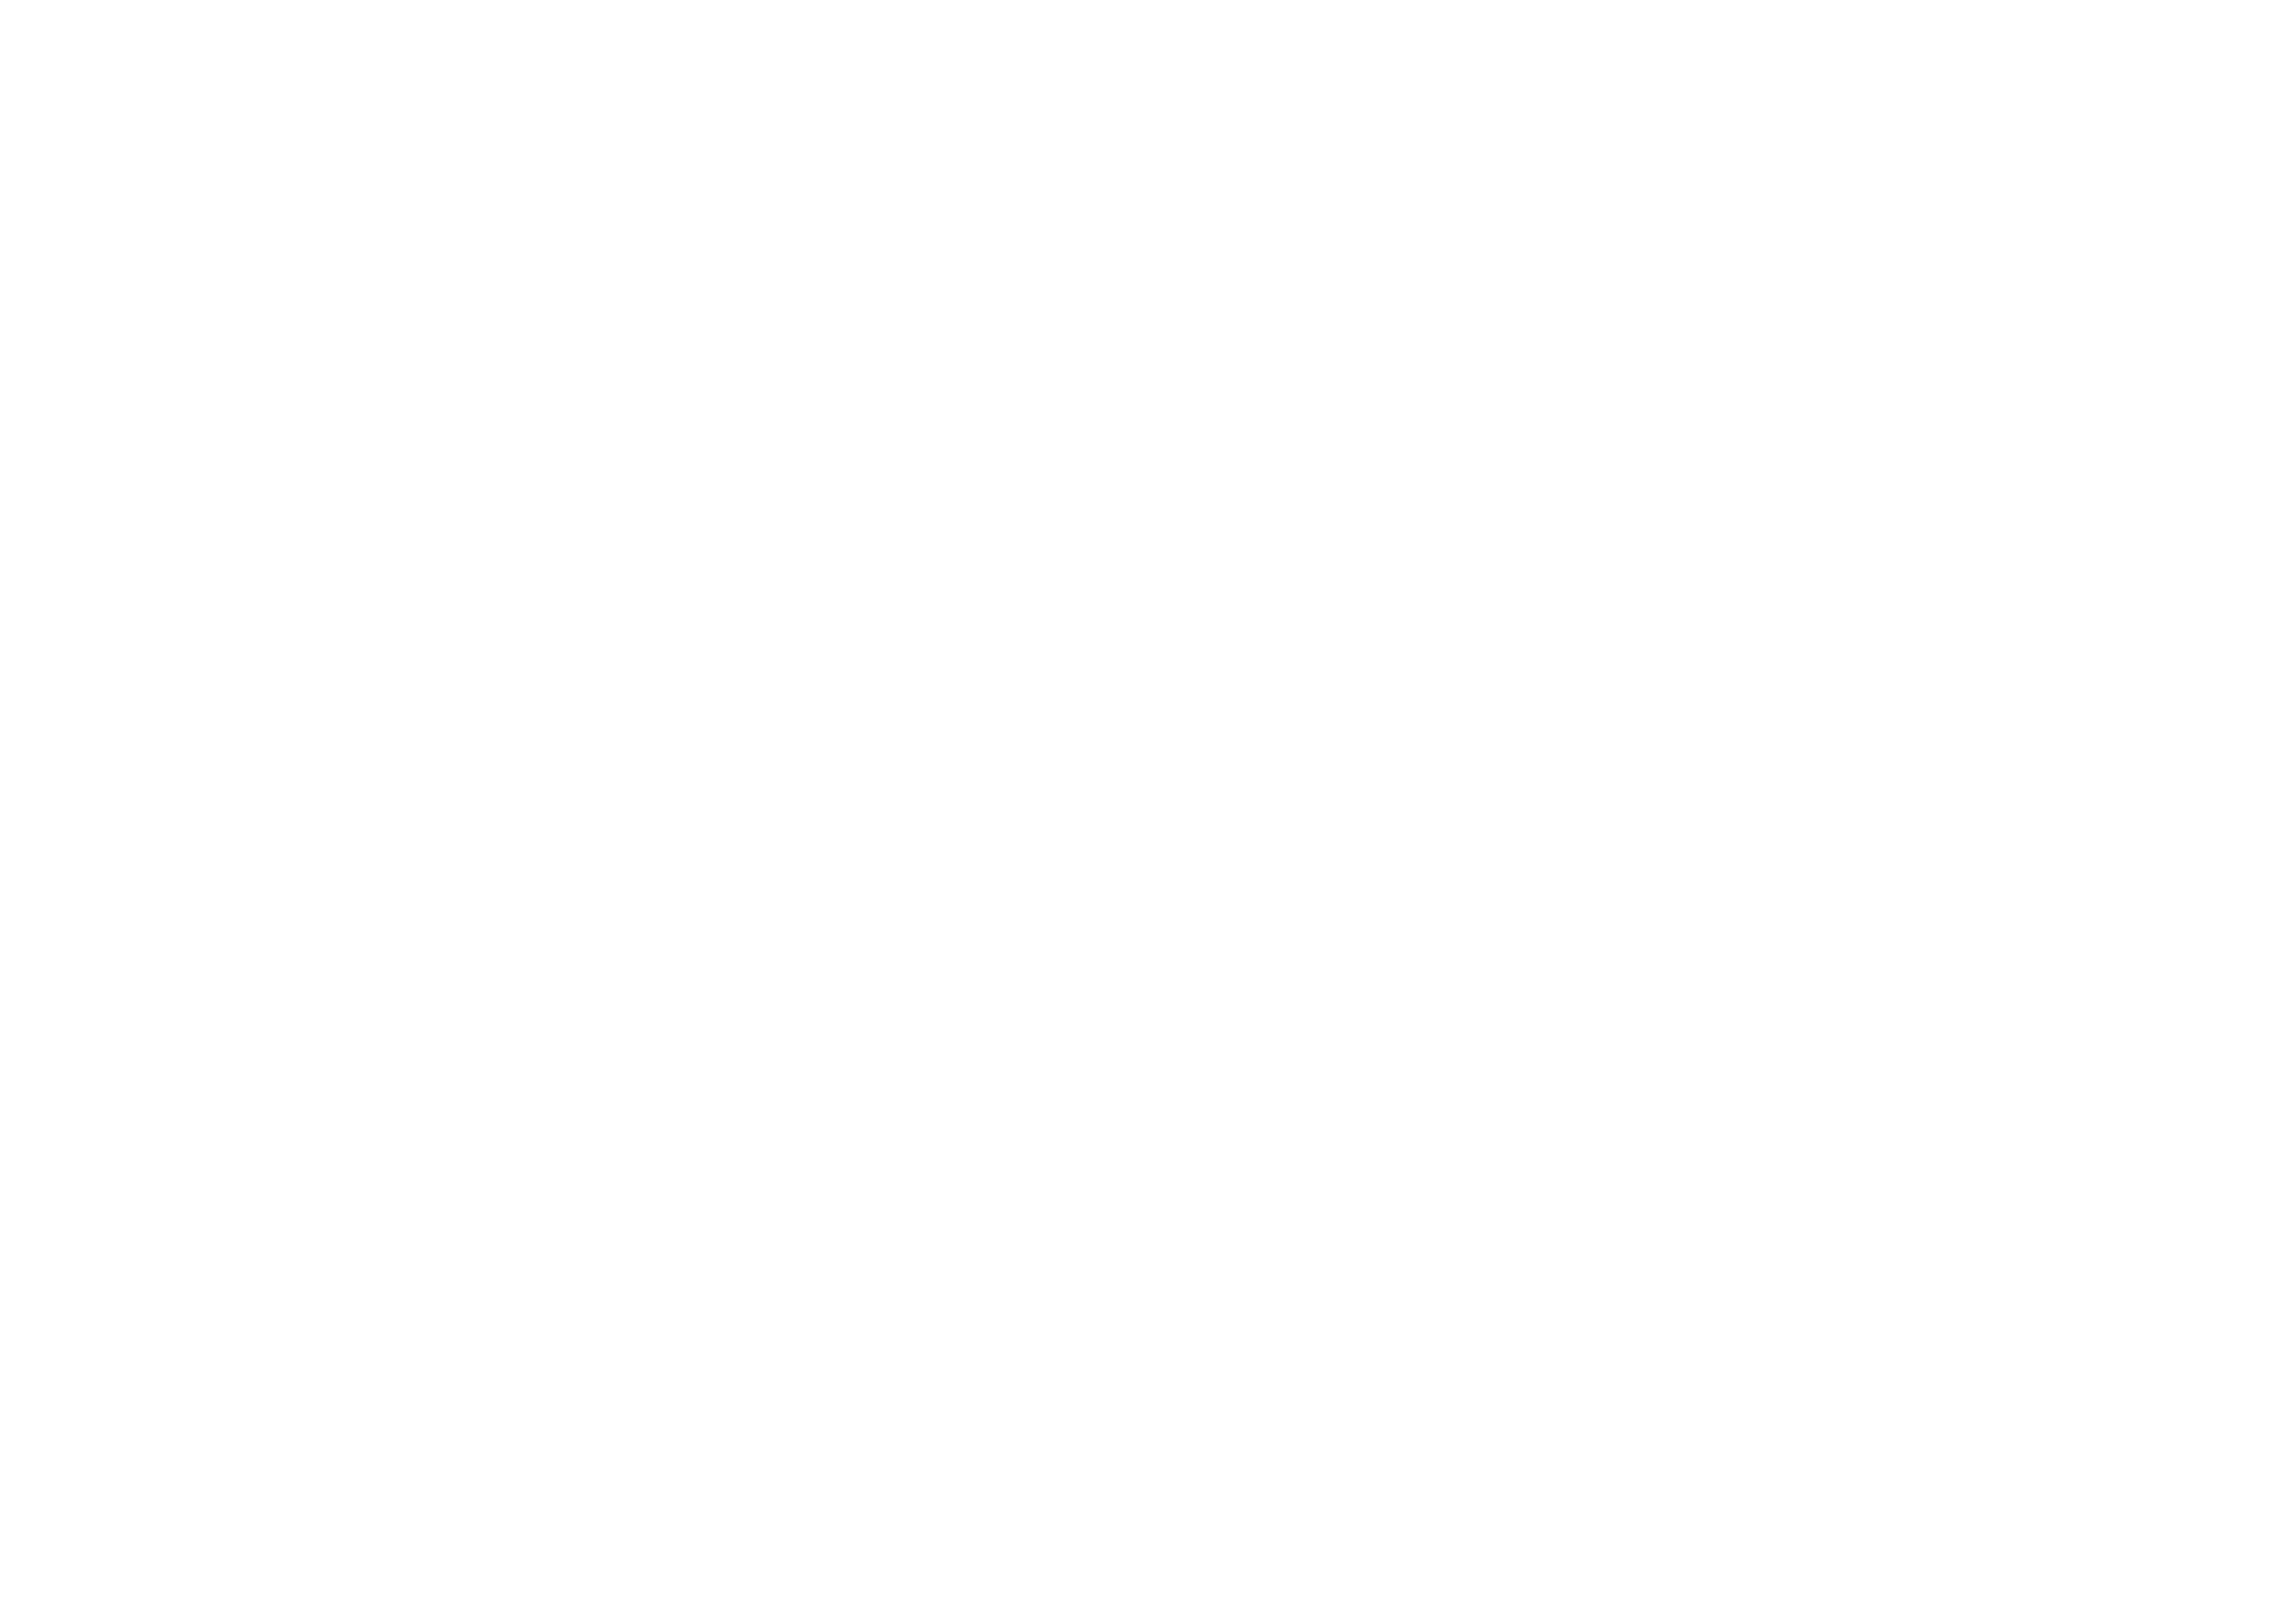 Hrauney